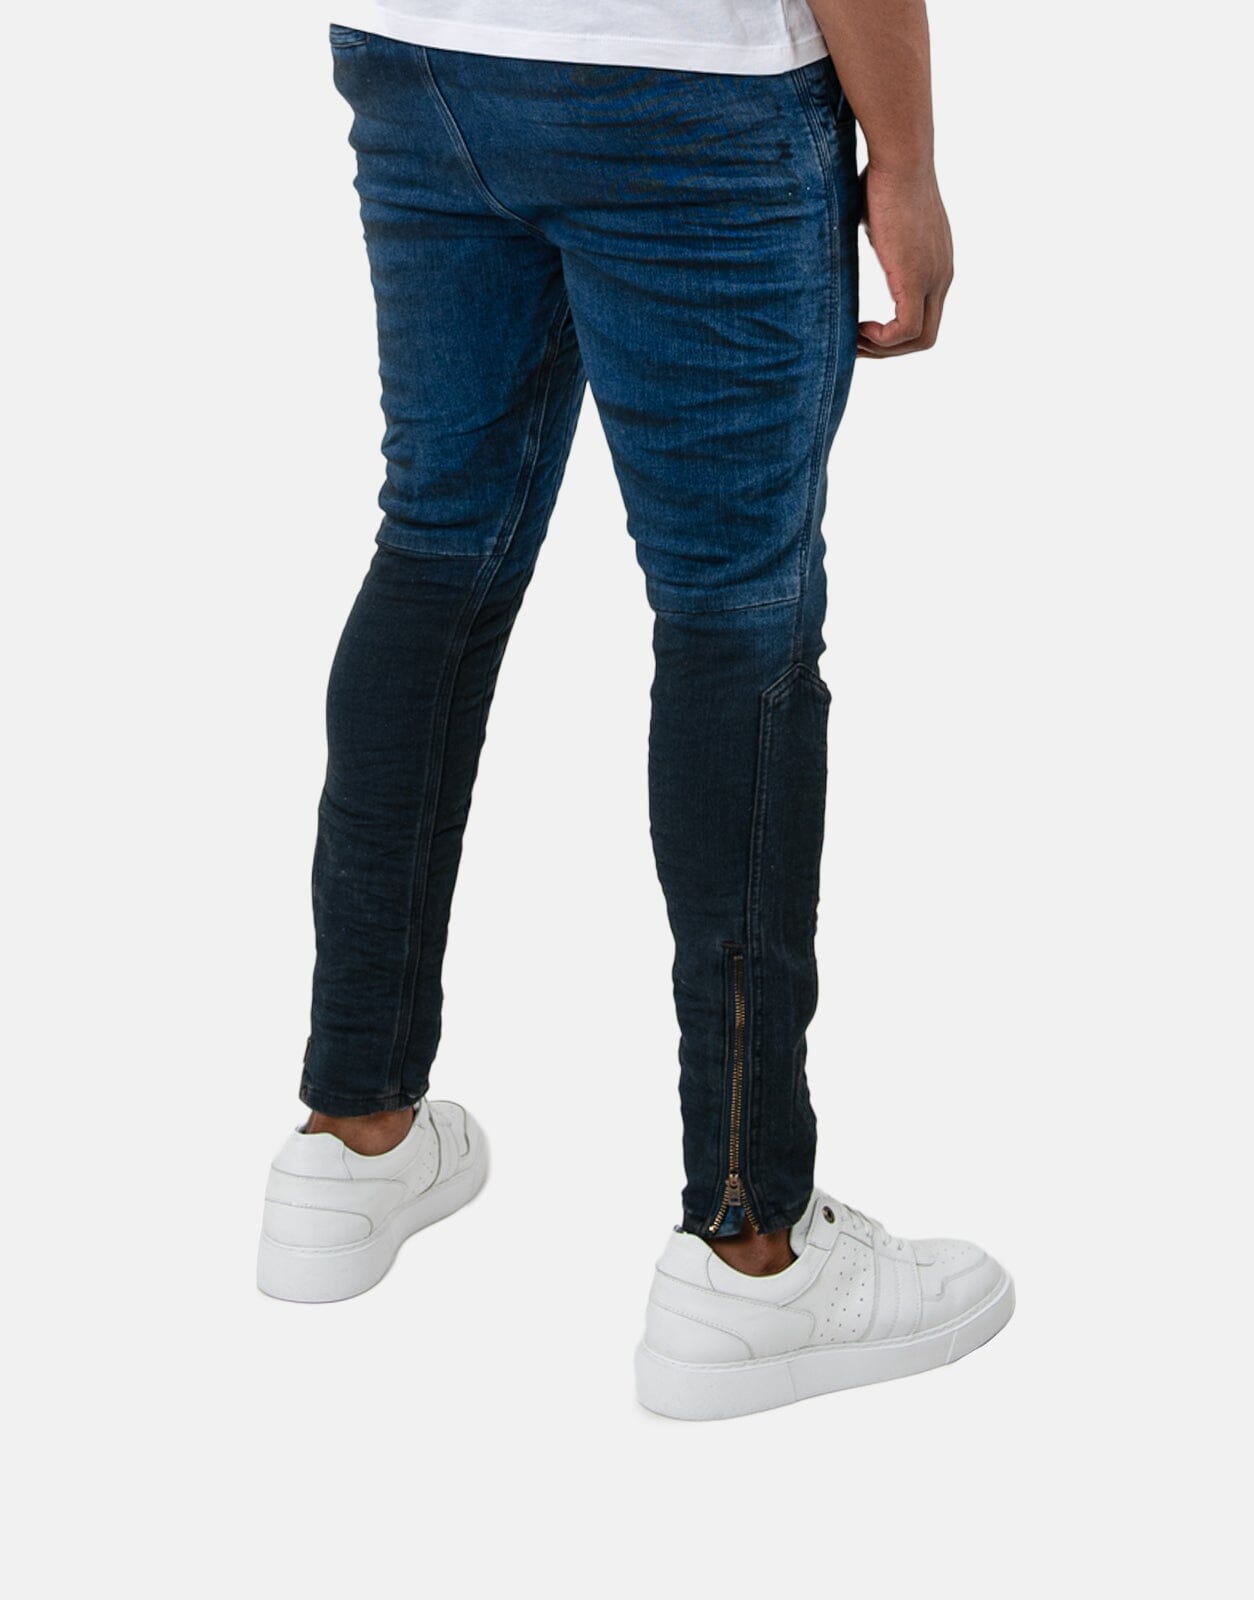 Vialli Morbido Cavaneria Jeans - Subwear